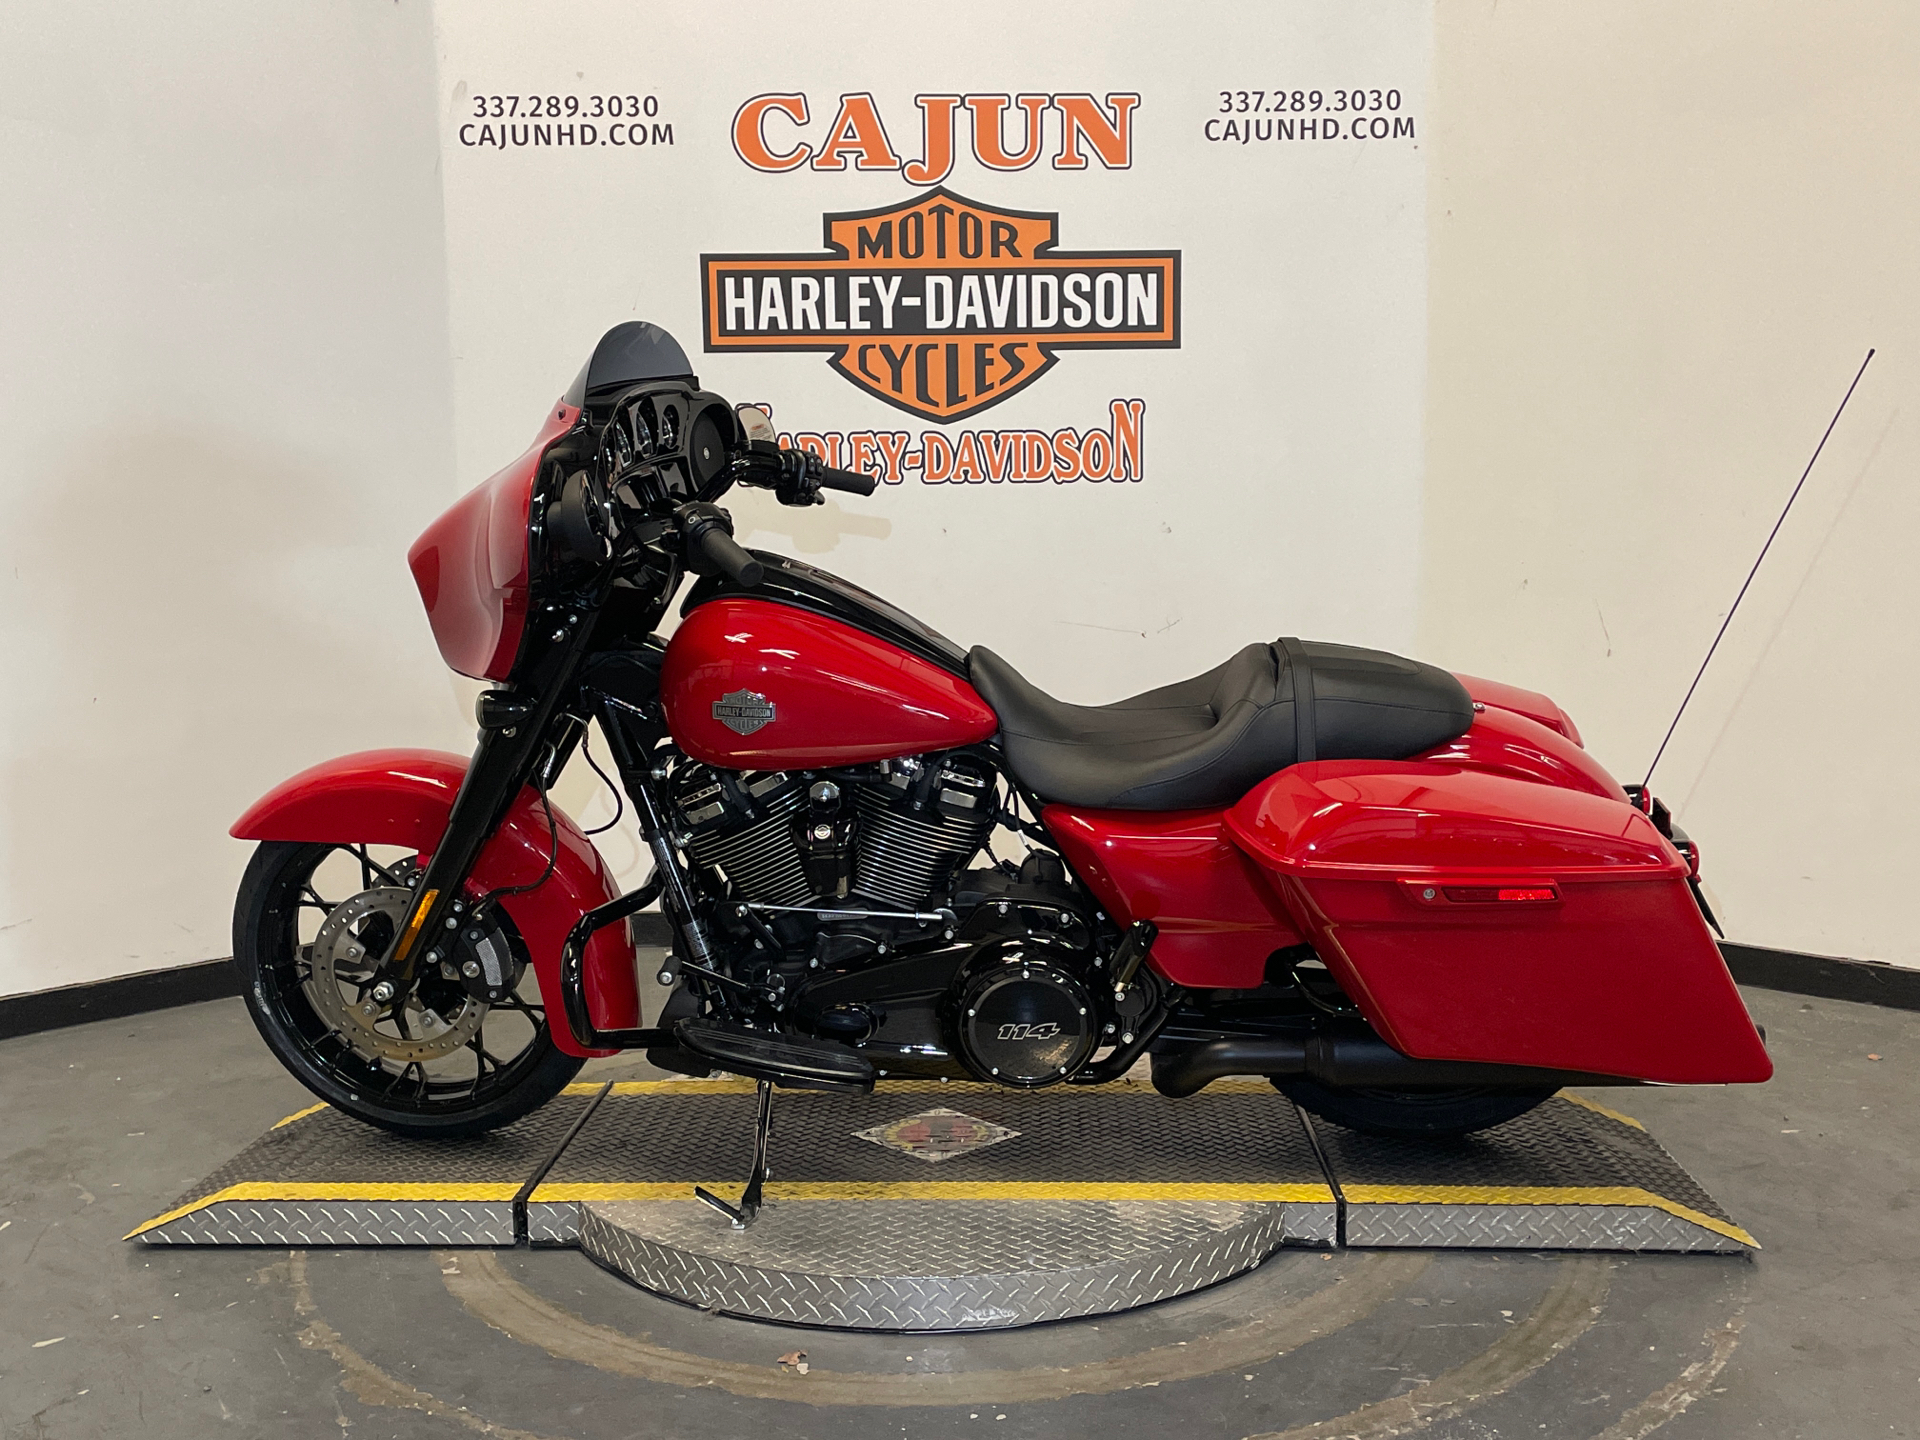 2022 Harley-Davidson Street Glide Special red - Photo 4